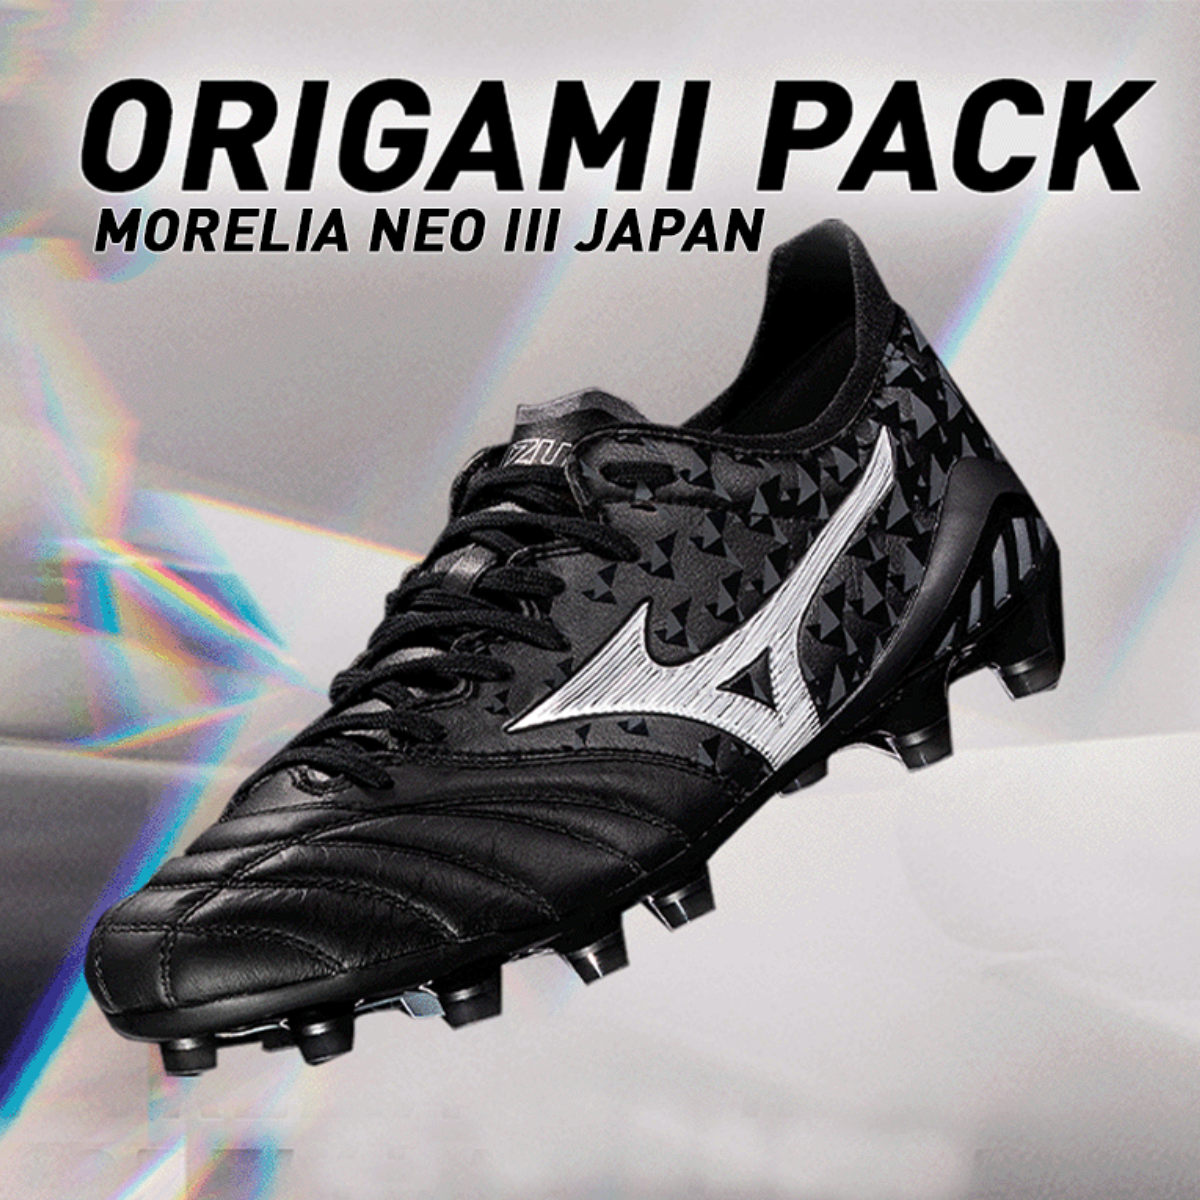 MORELIA NEO III JAPAN- ORIGAMI PACK